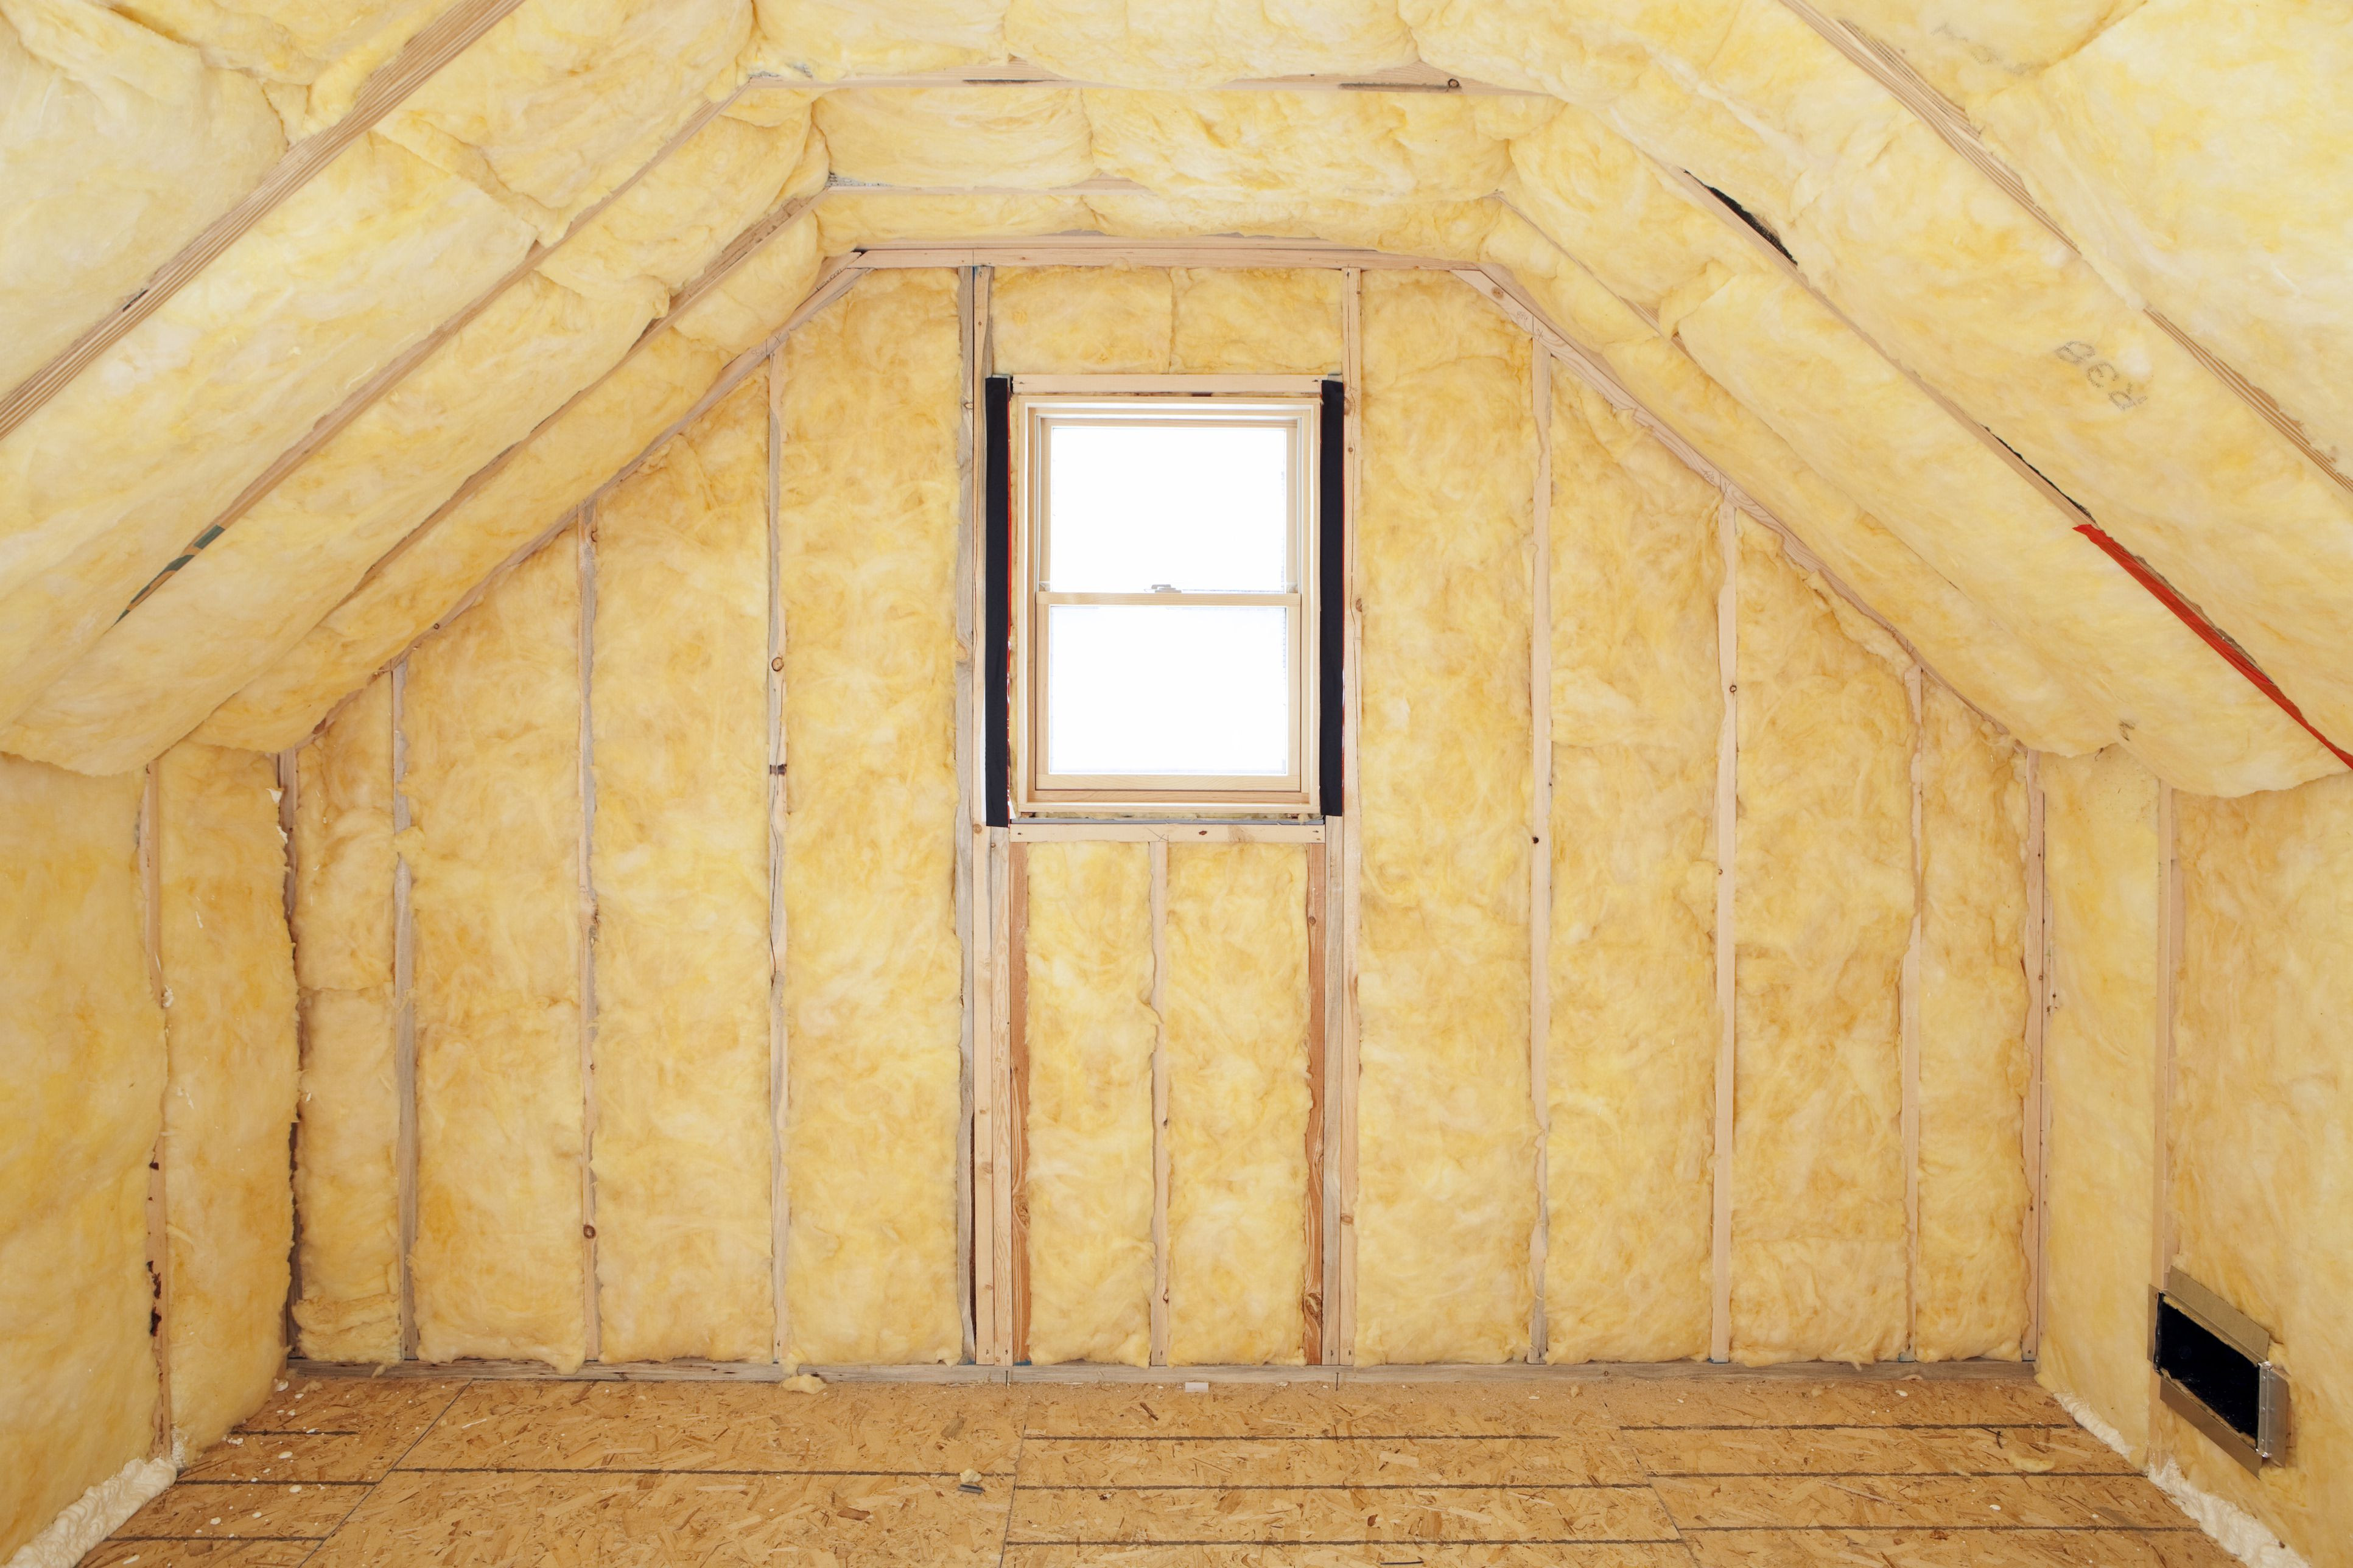 hardwood floor refinishing dearborn mi of how to build attic flooring inside attic room insulation frame and window 185300643 57f64f883df78c690ffbfcb9